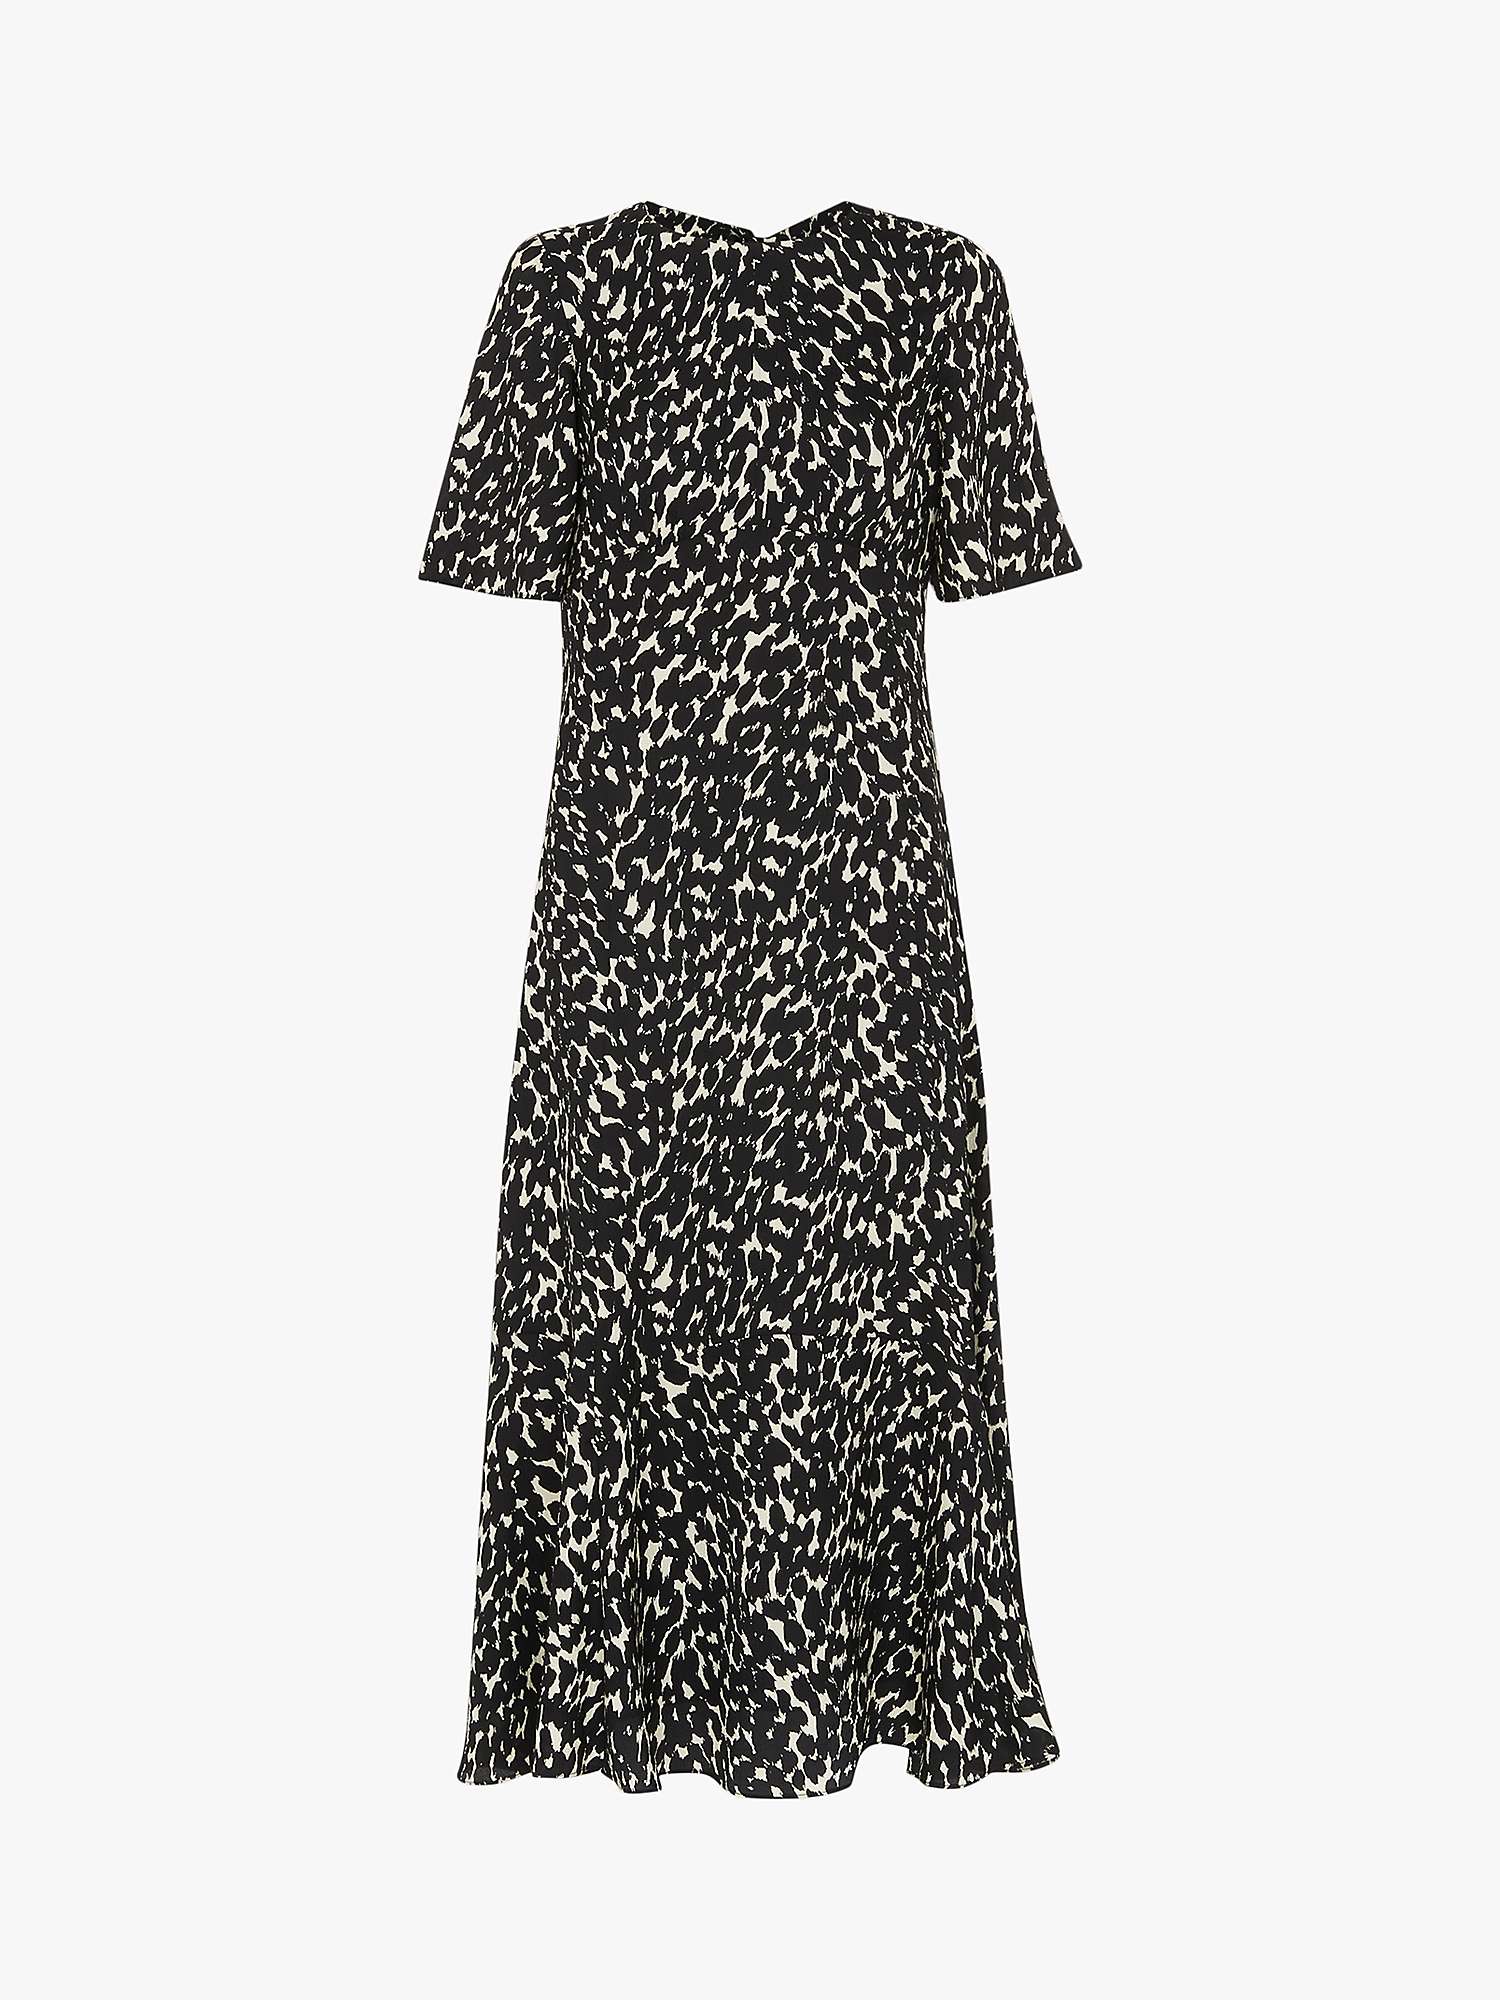 Whistles Sahara Animal Print Midi Dress, Black/Multi at John Lewis ...